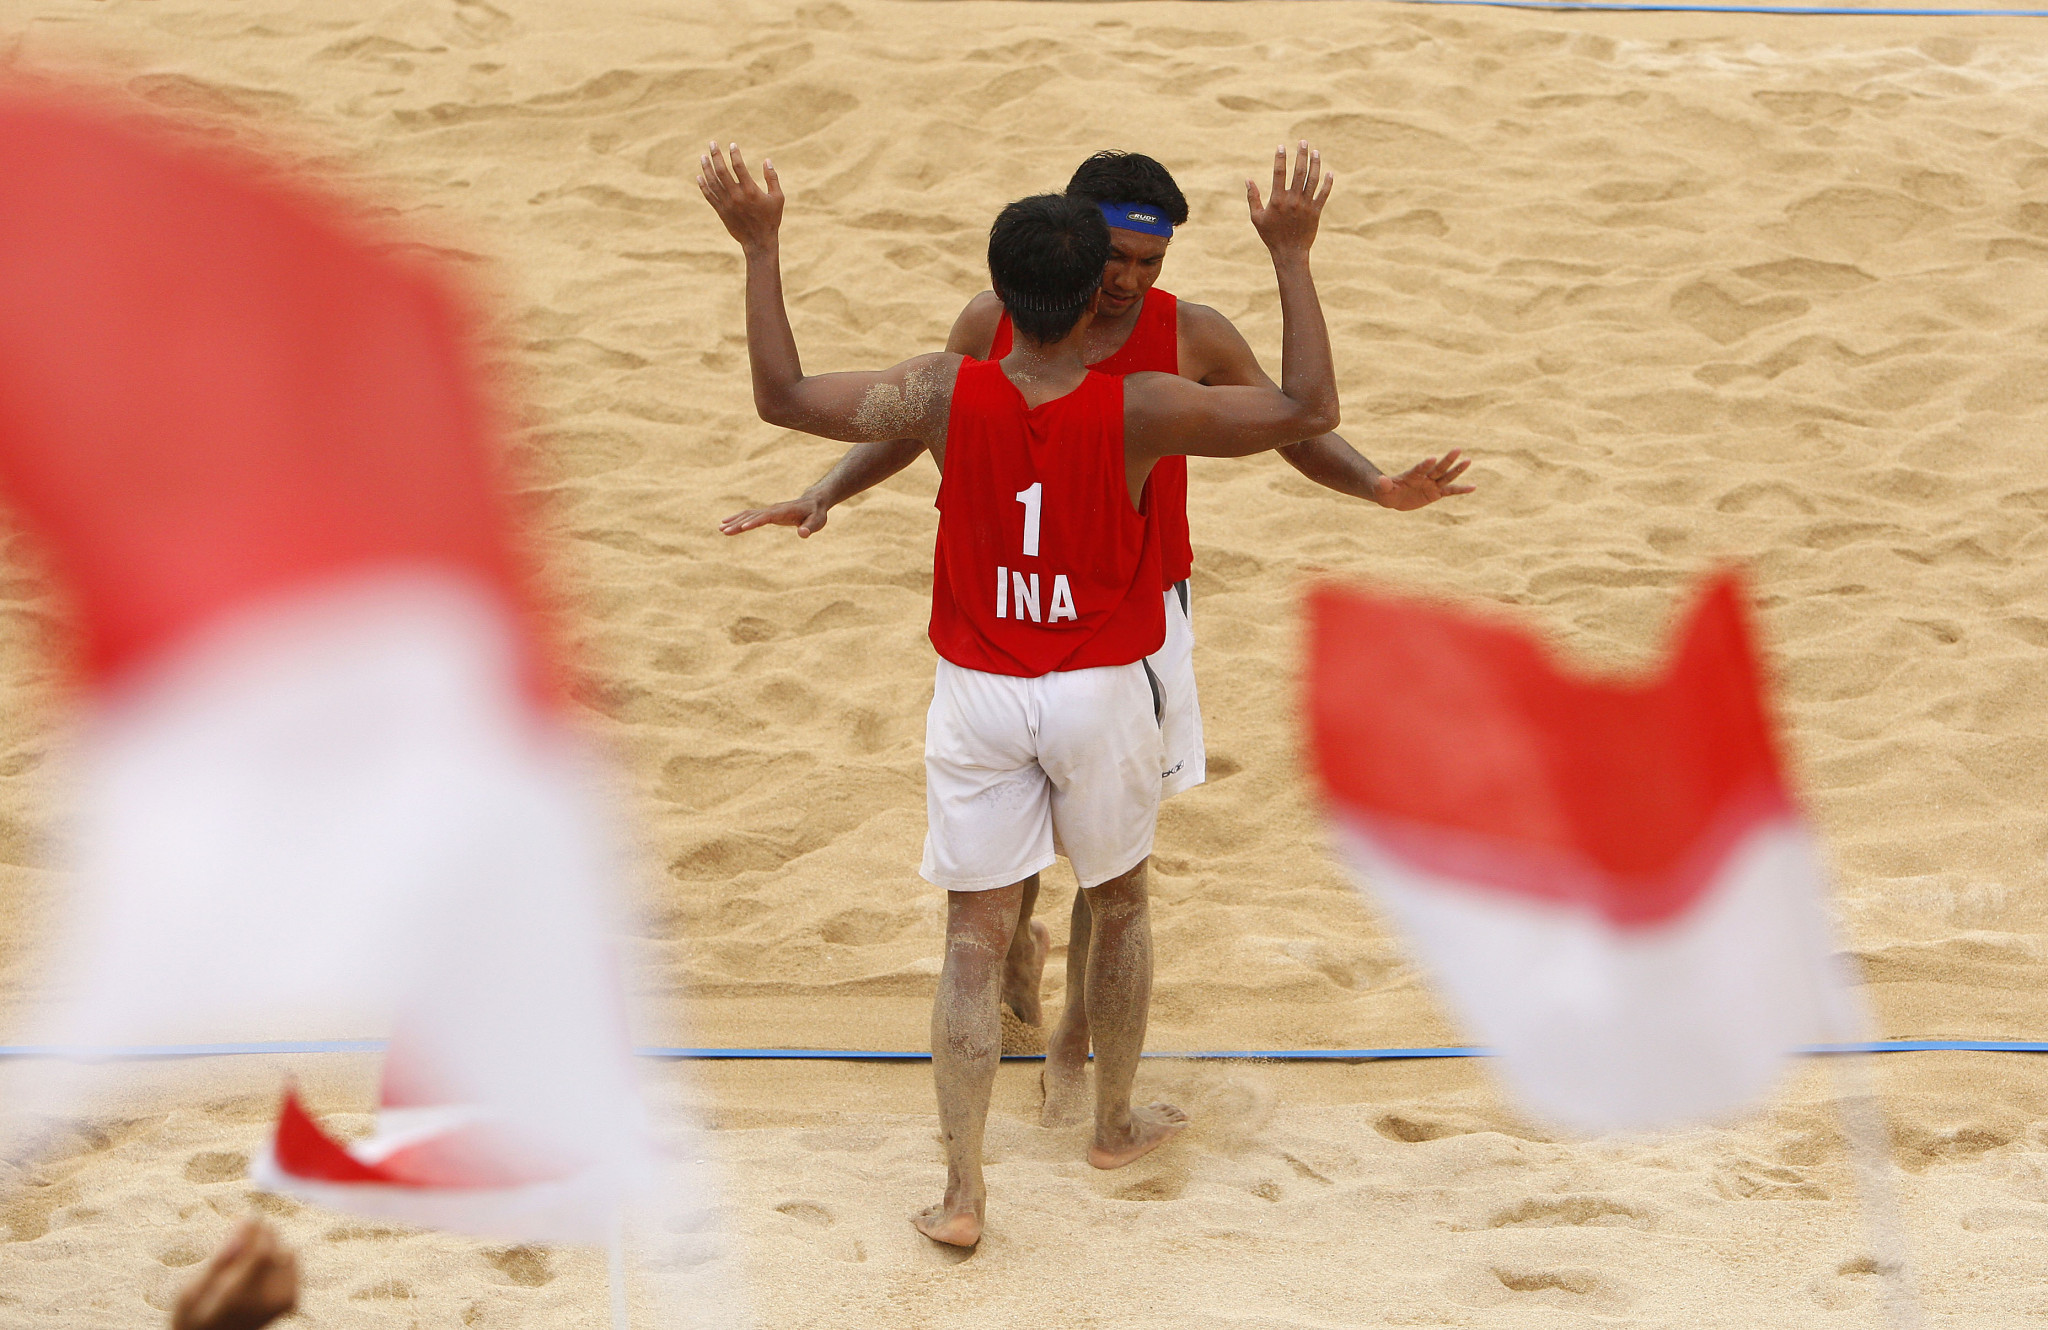 Bali chosen to host 2023 ANOC World Beach Games